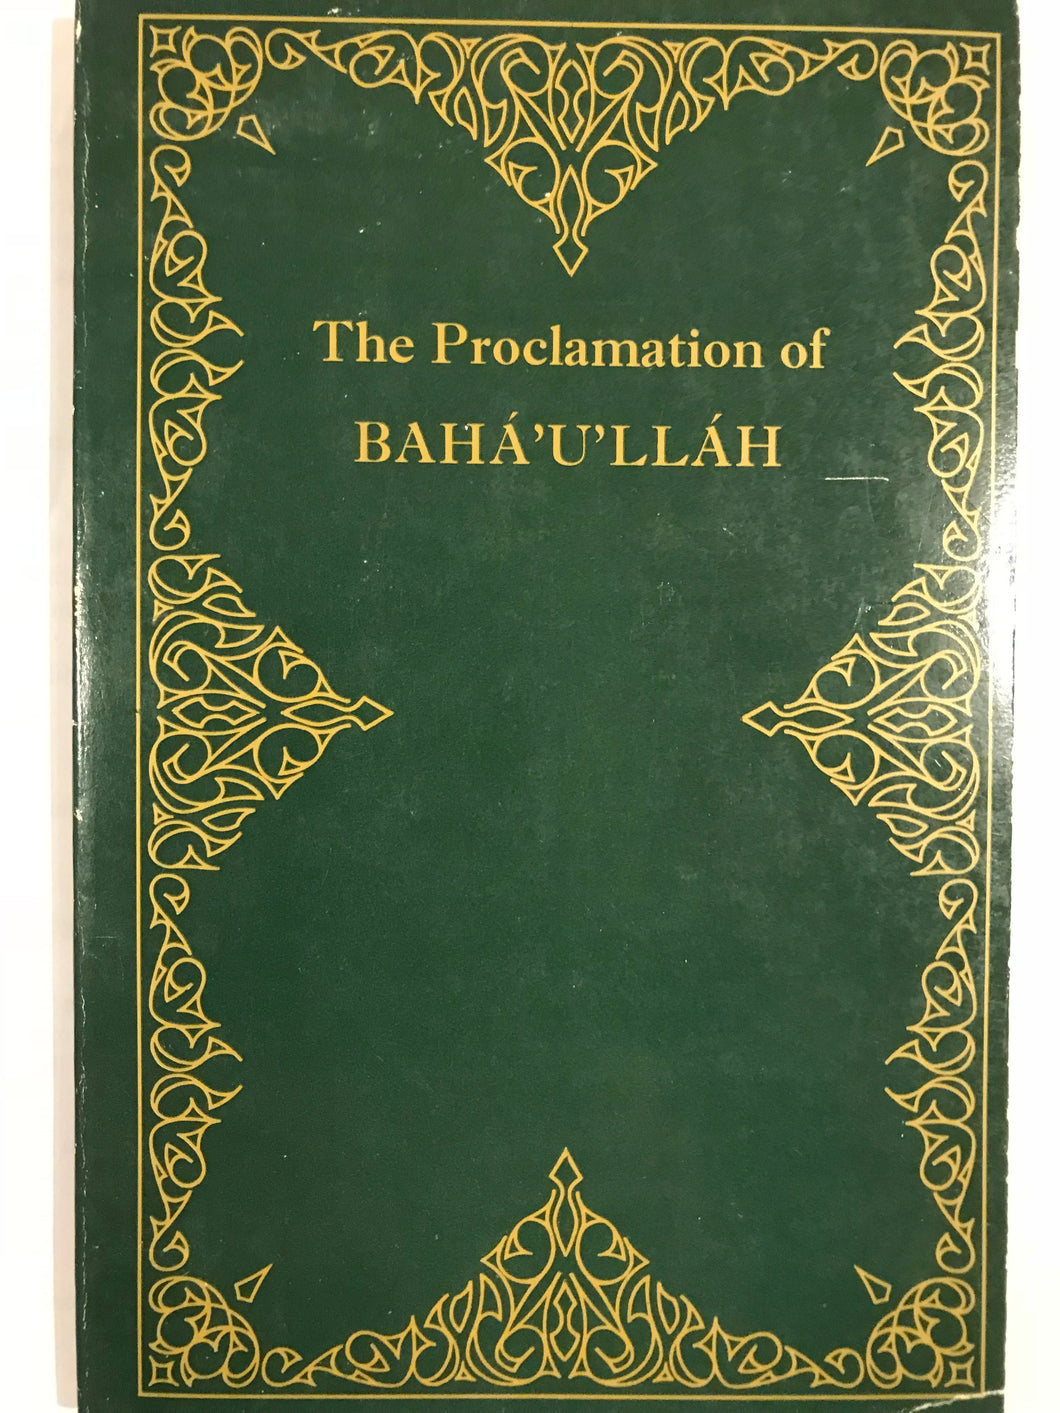 The Proclamation of Baha’U’llah